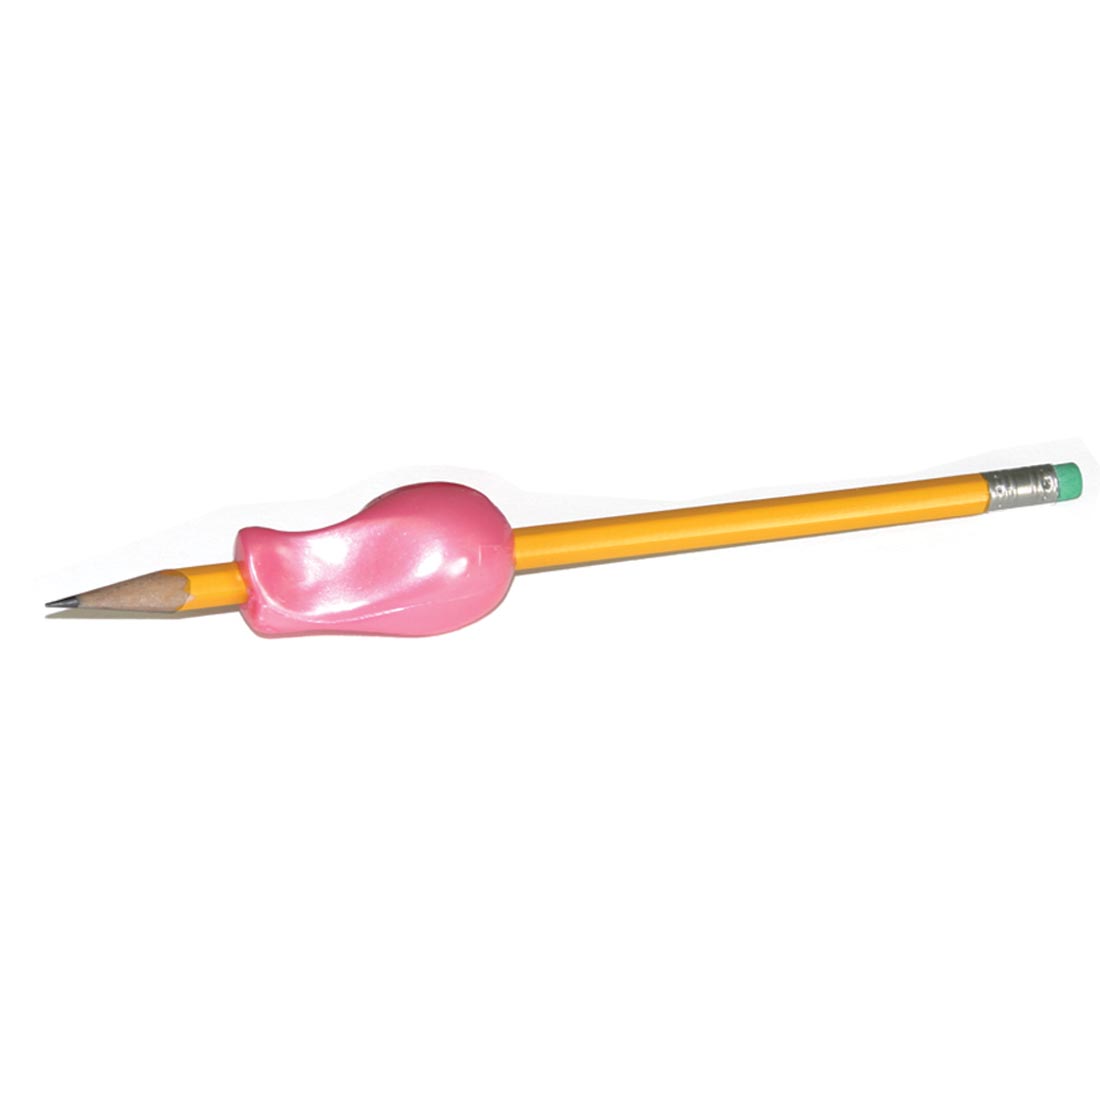 The Pencil Grip Jumbo Size Metallic on a pencil